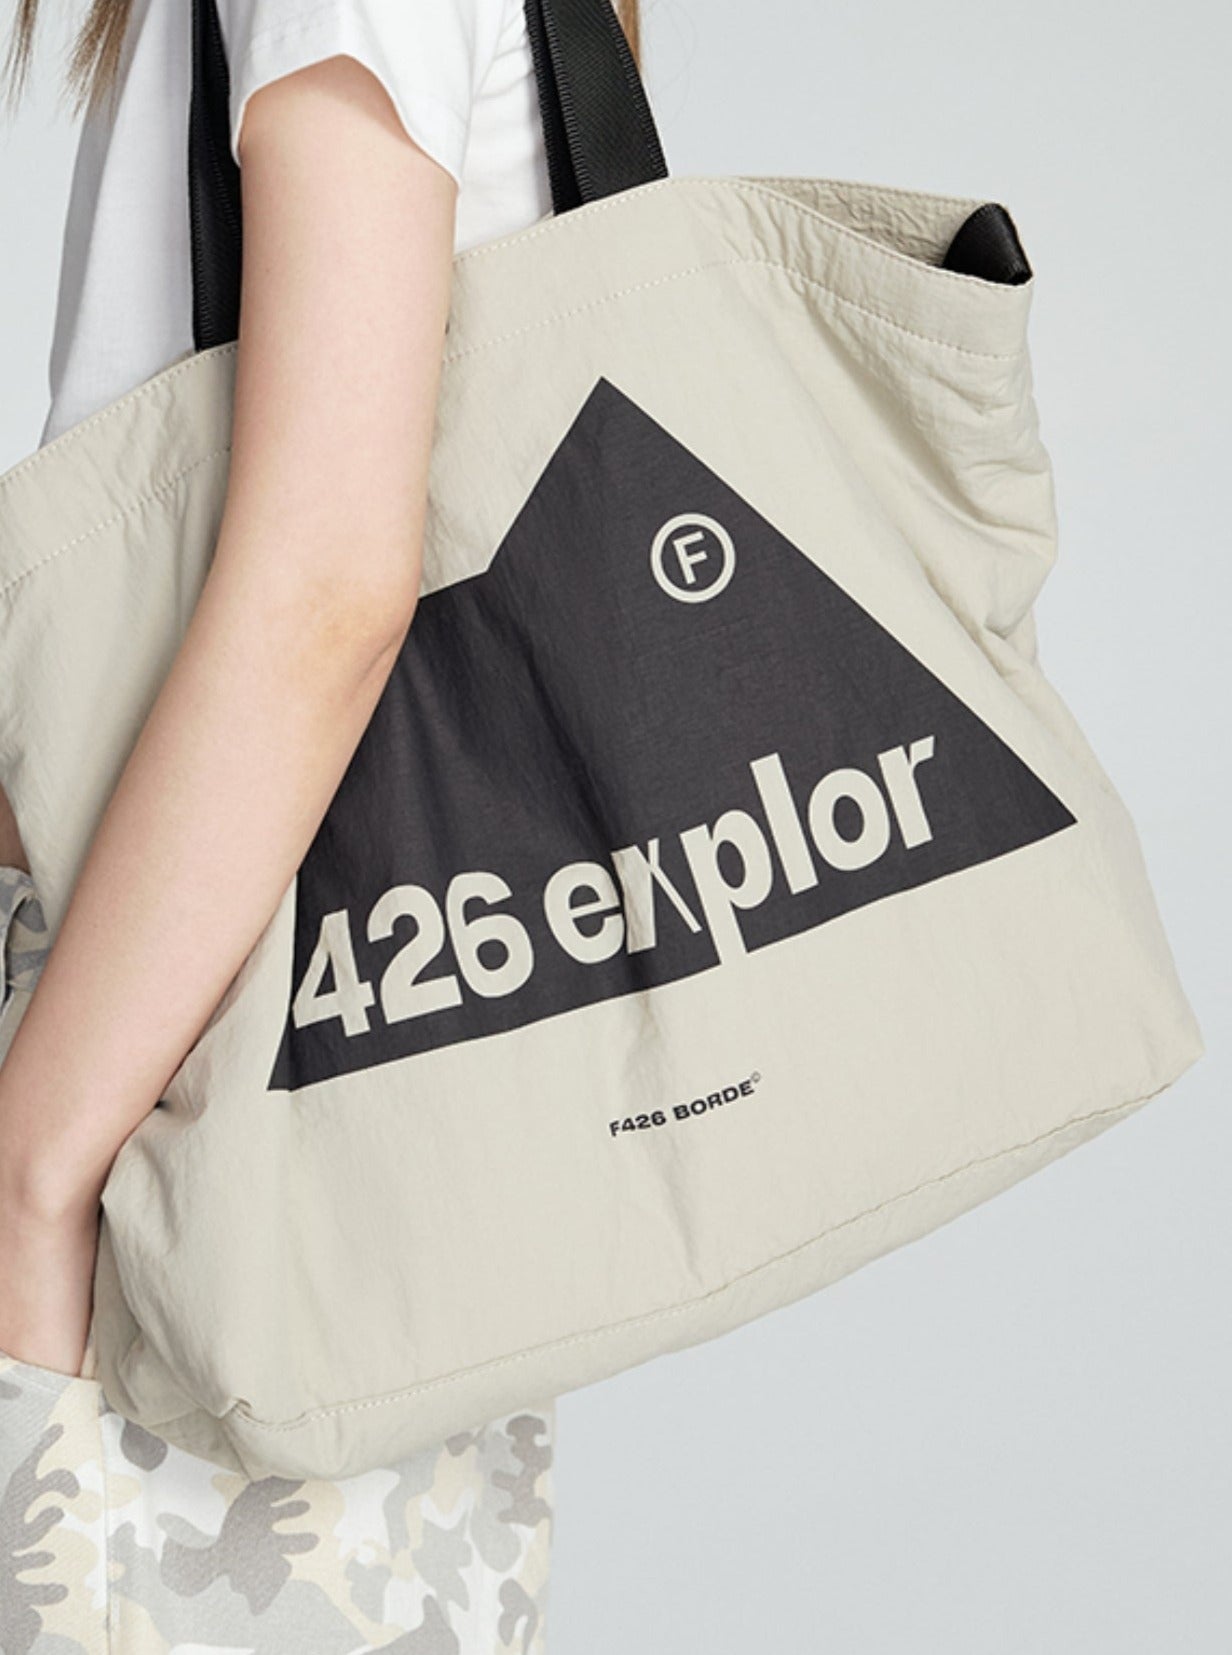 Outdoor Handbag with Geometric Design - chiclara